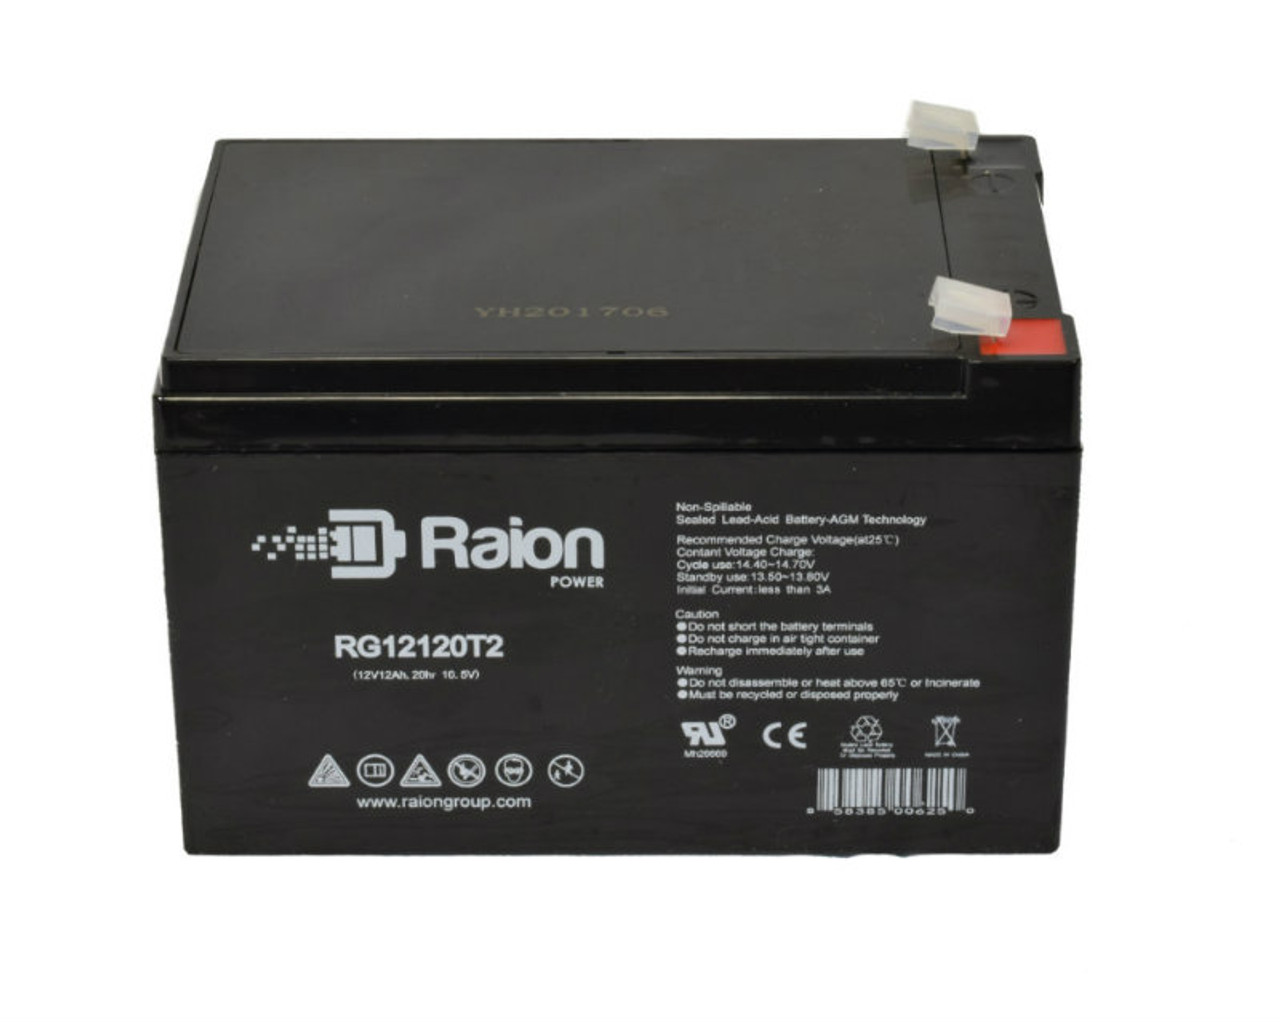 Raion Power RG12120T2 SLA Battery for Sealed Lead Acid 12 Volt 12 Amp